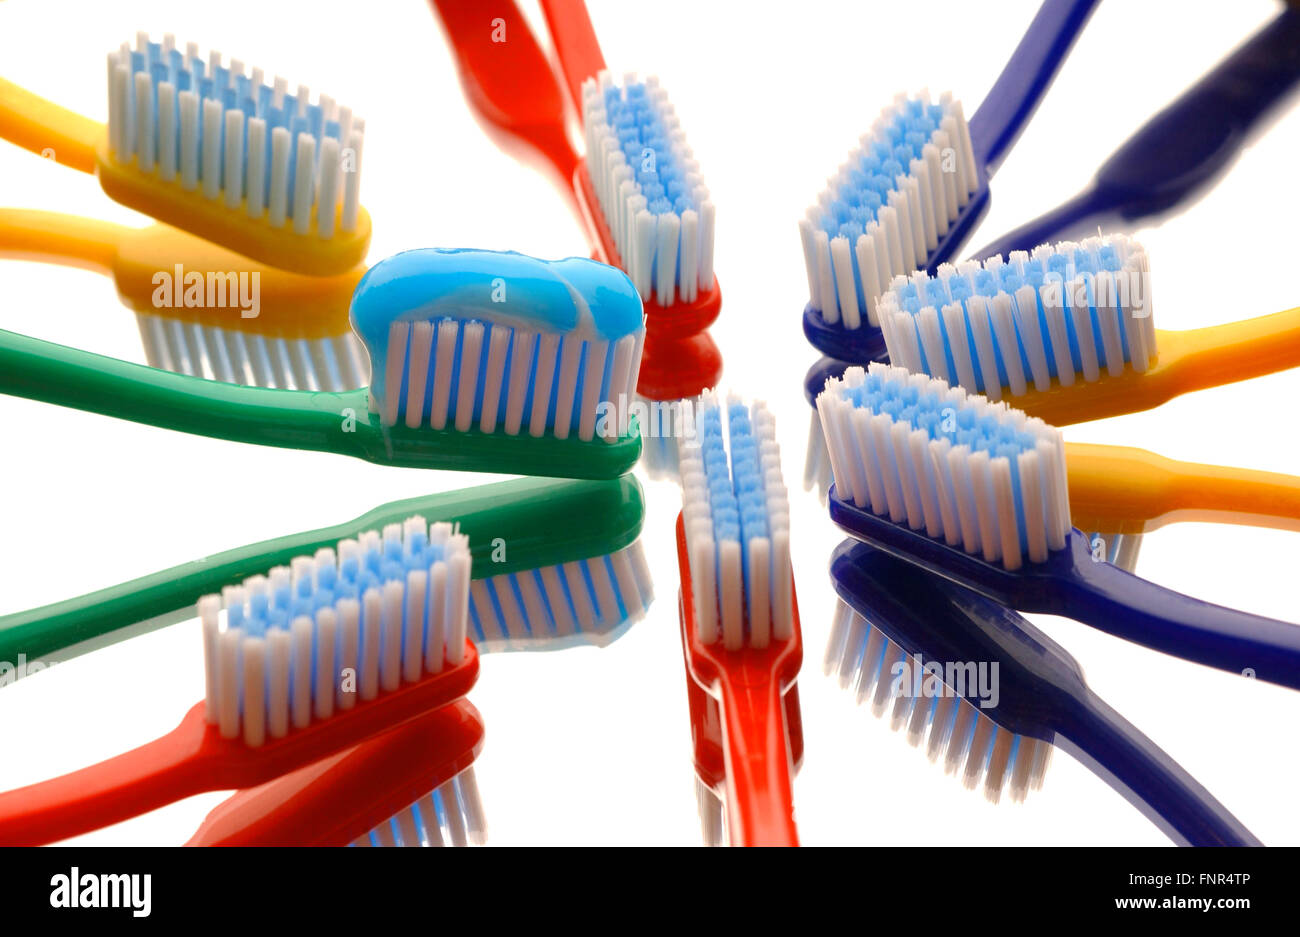 Numerous toothbrush heads. Stock Photo